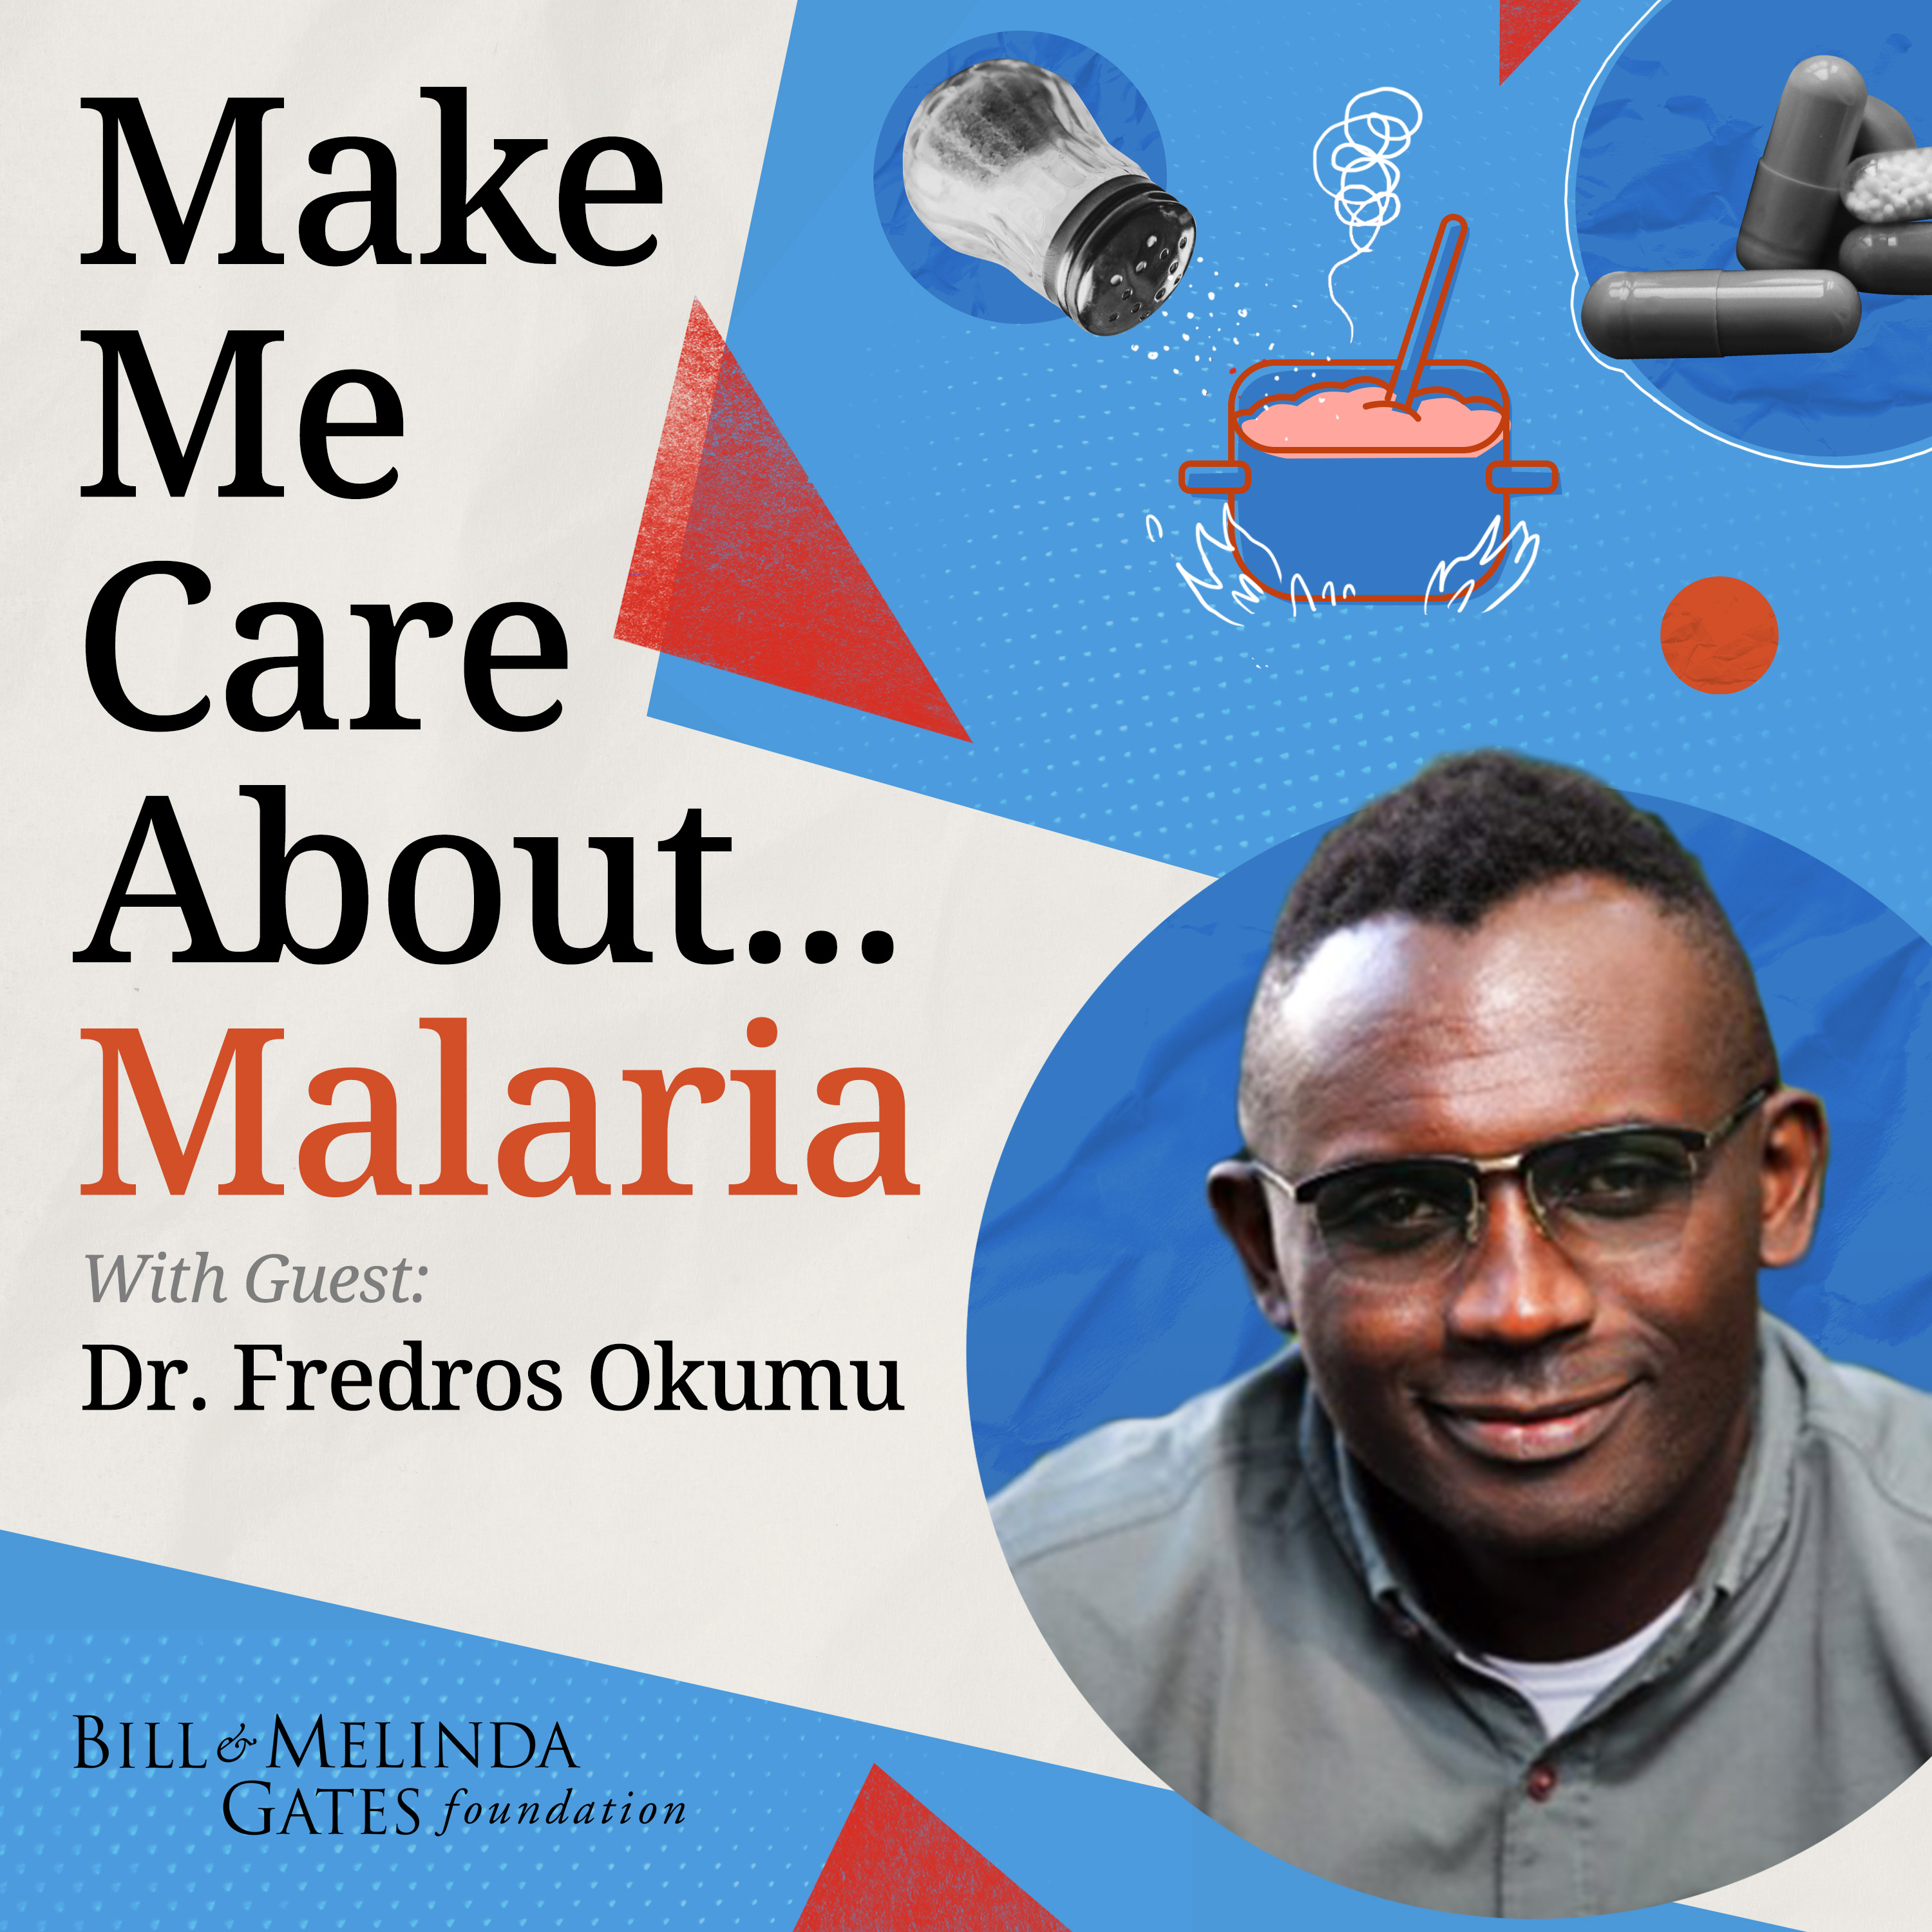 Make Me Care About...Malaria